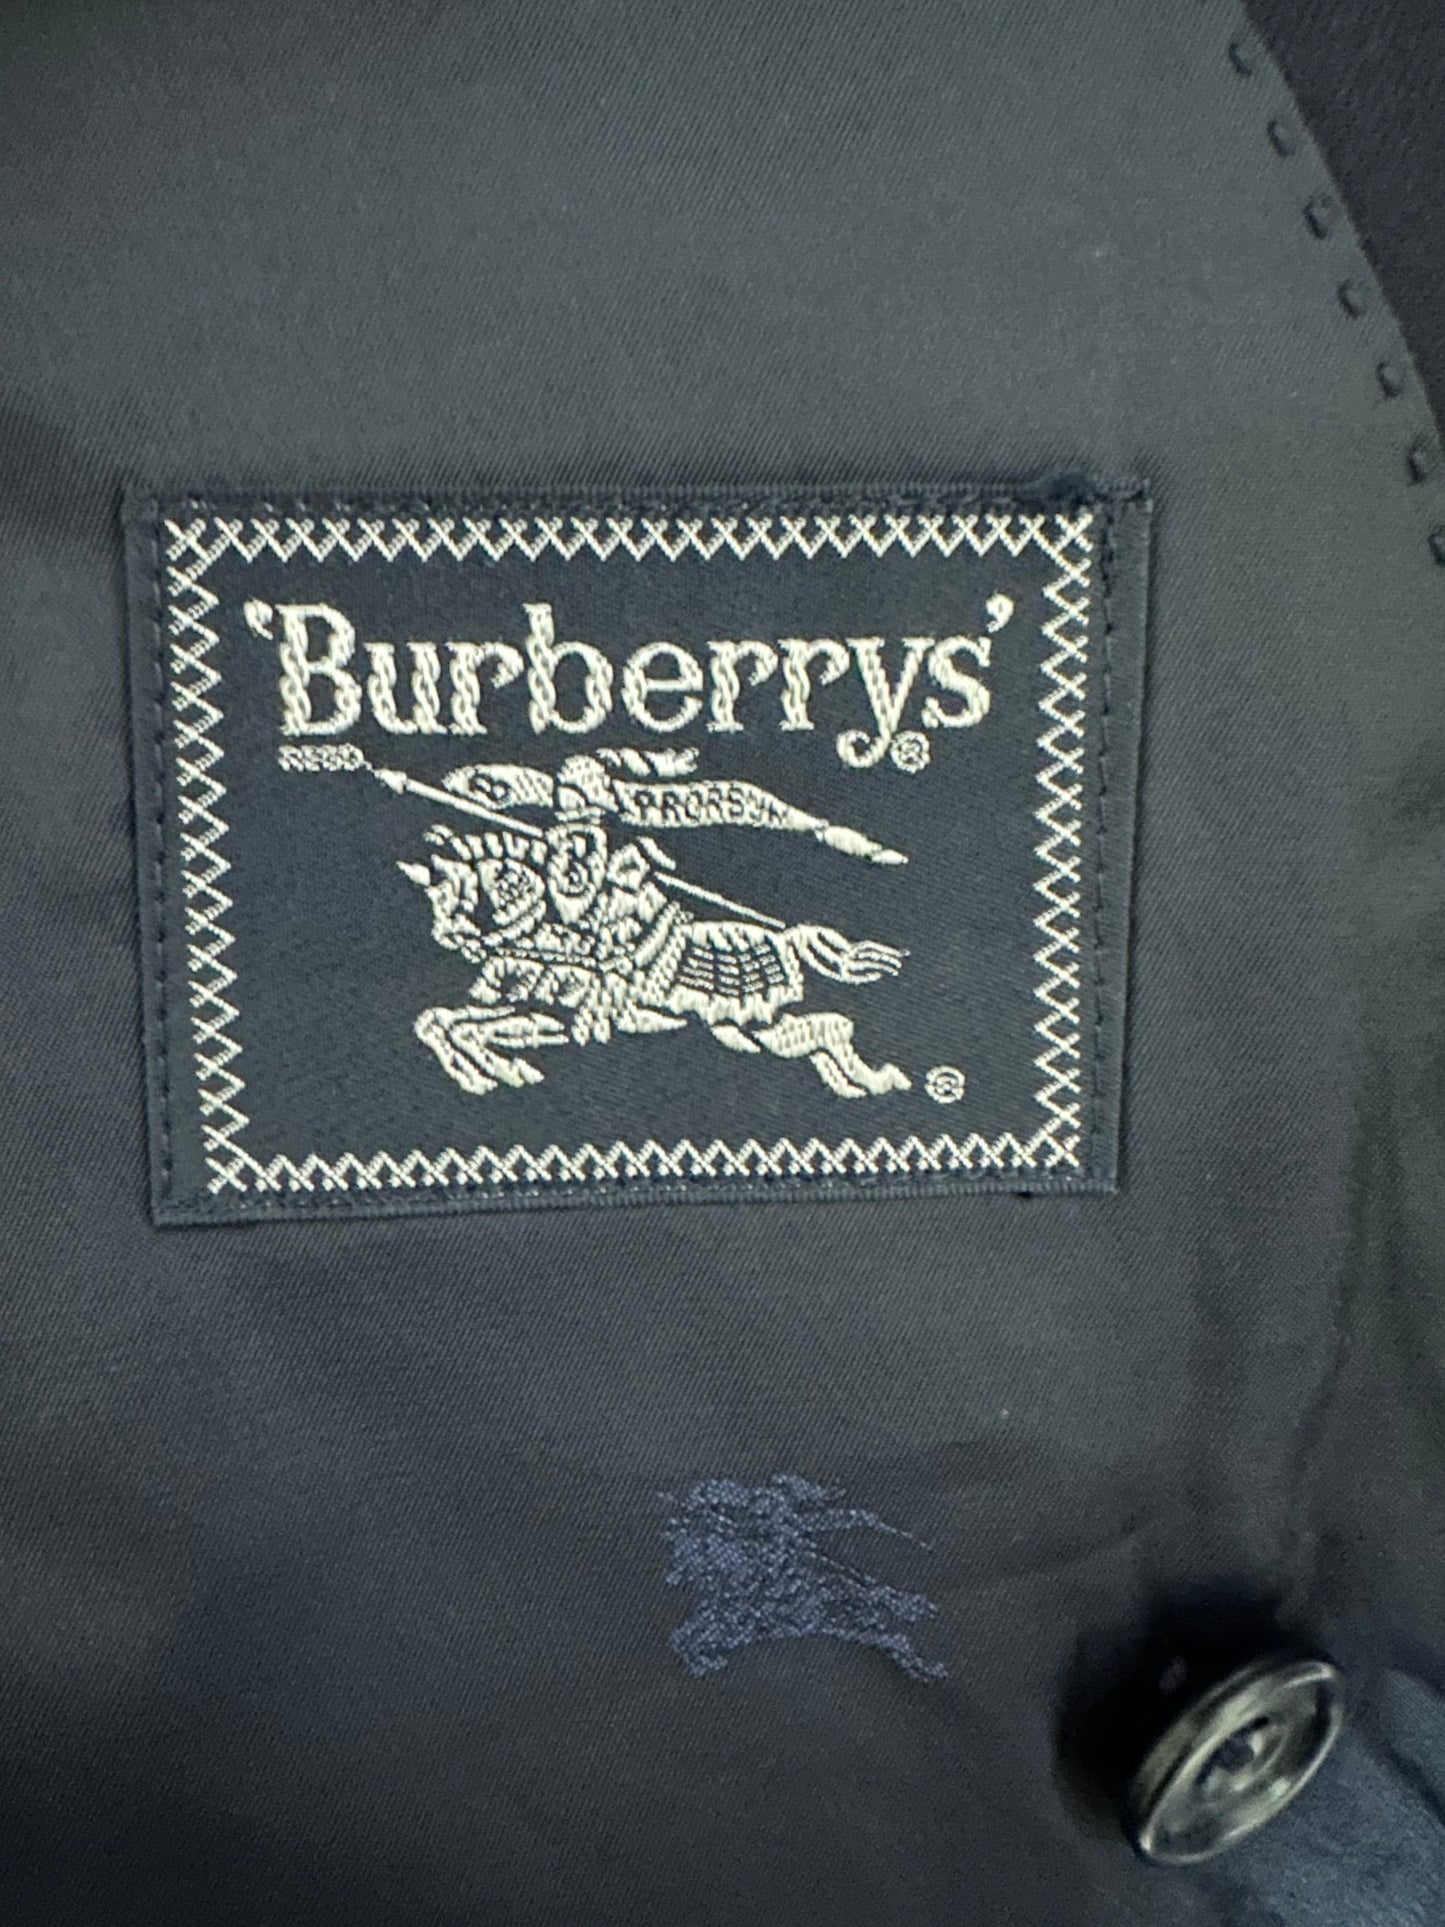 Burberrys' black double breasted blazer 90s